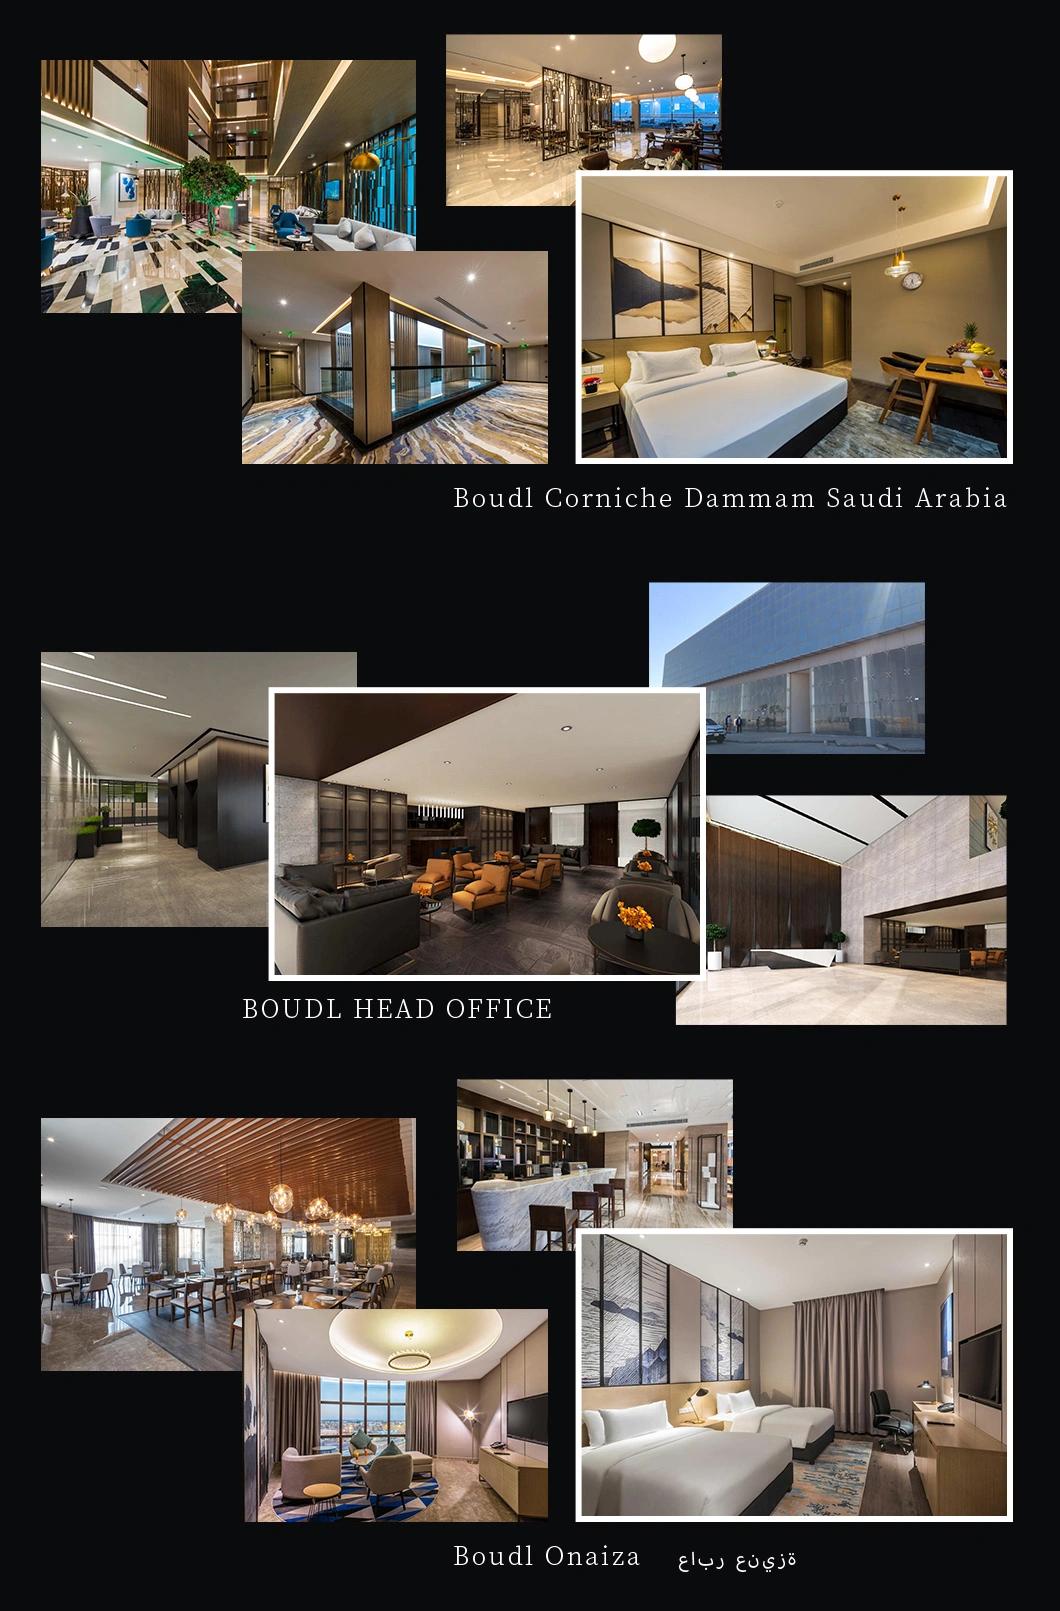 Luxury Star Hotel Bedroom Furniture / Villa Furniture (JNB-027)